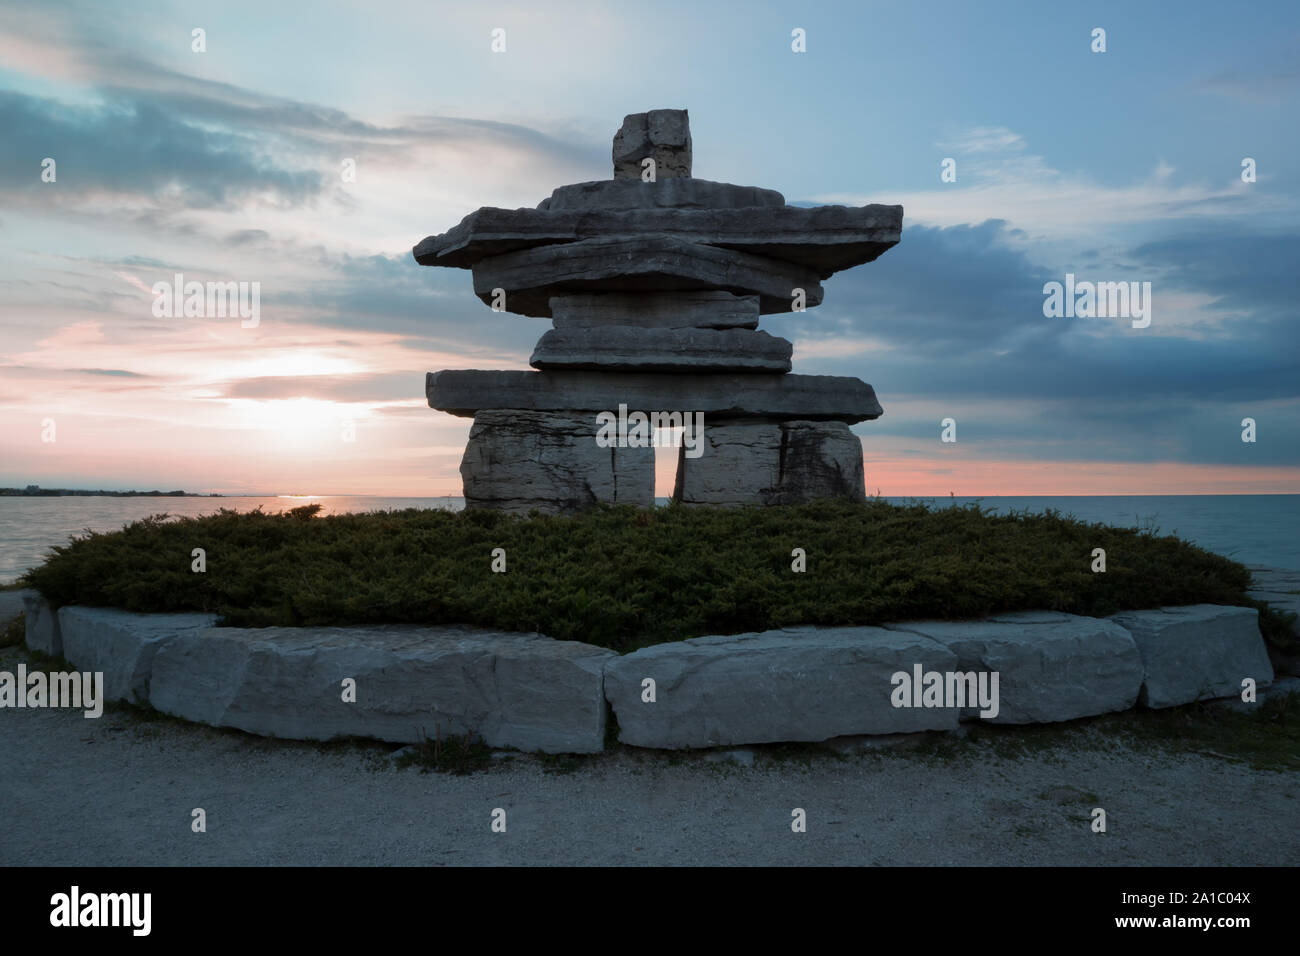 Canada Ontario Sunset en Sunset Point en CollingwoodI, Nushuk Stone Landmark, estábamos aquí, Foto de stock